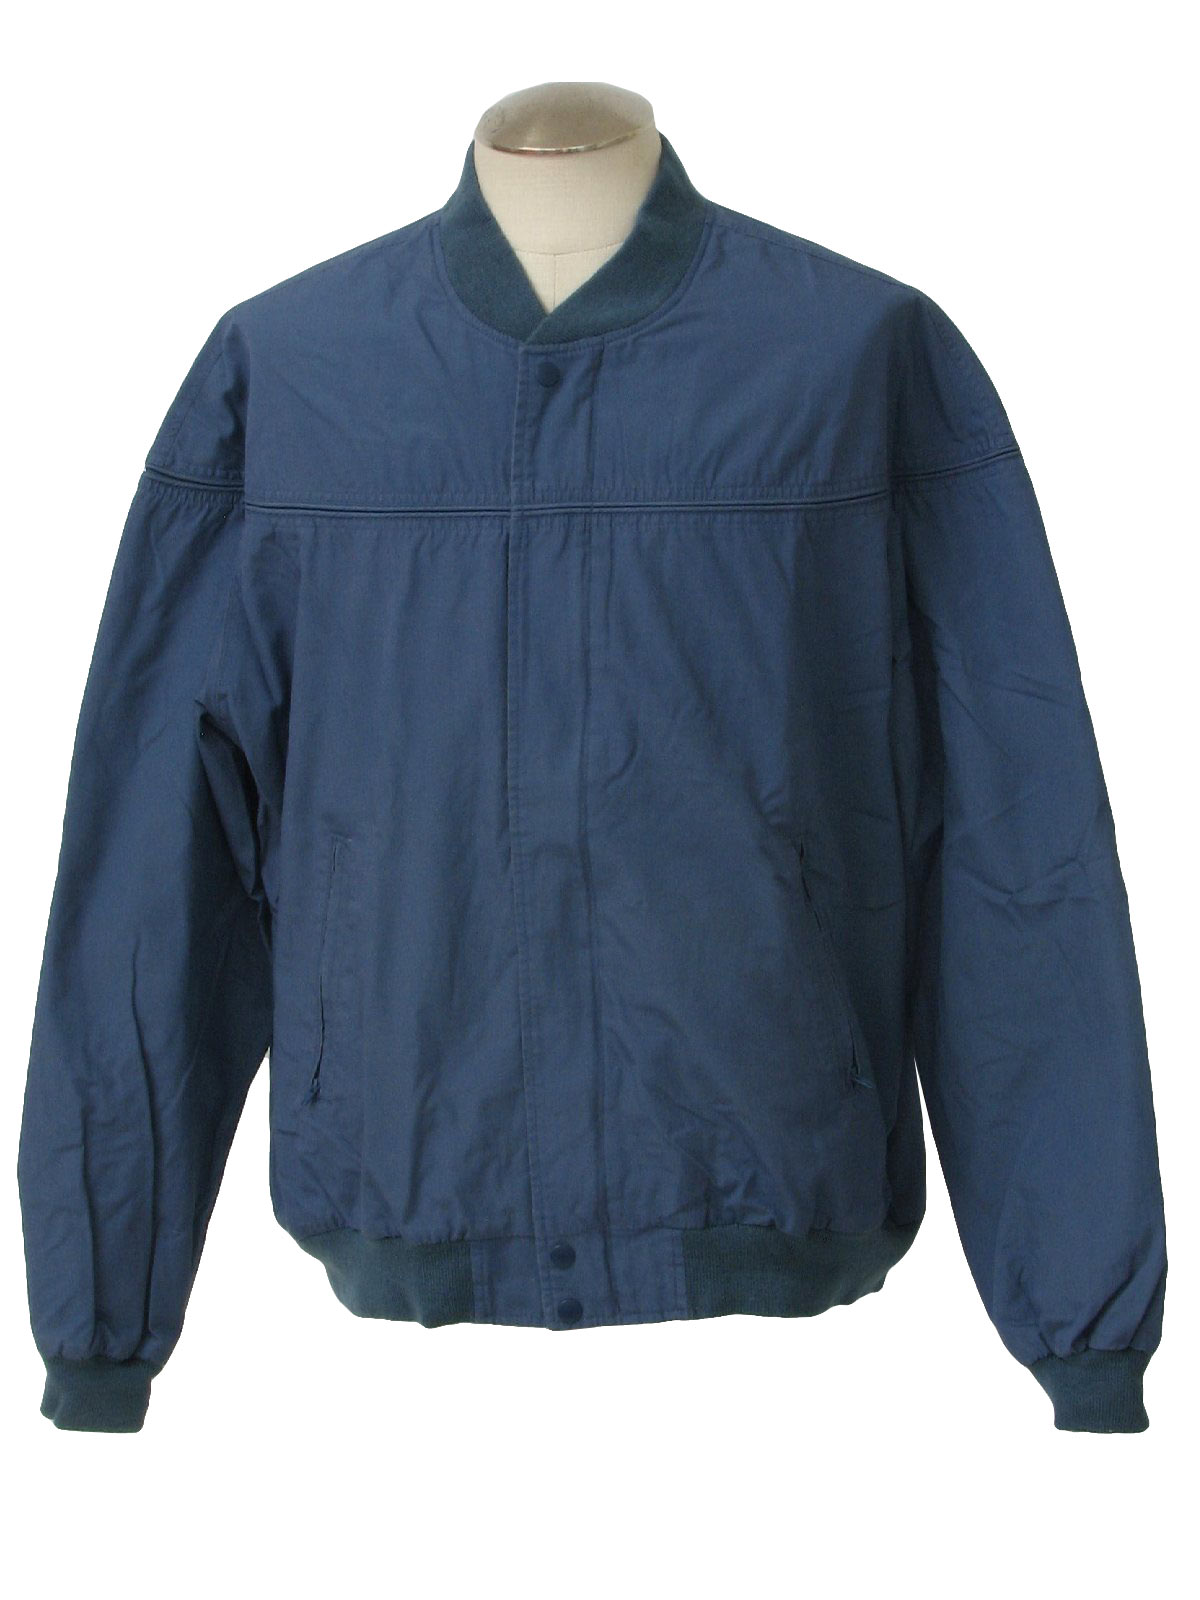 Retro Nineties Jacket: 90s -David Taylor- Mens periwinkle blue cotton ...